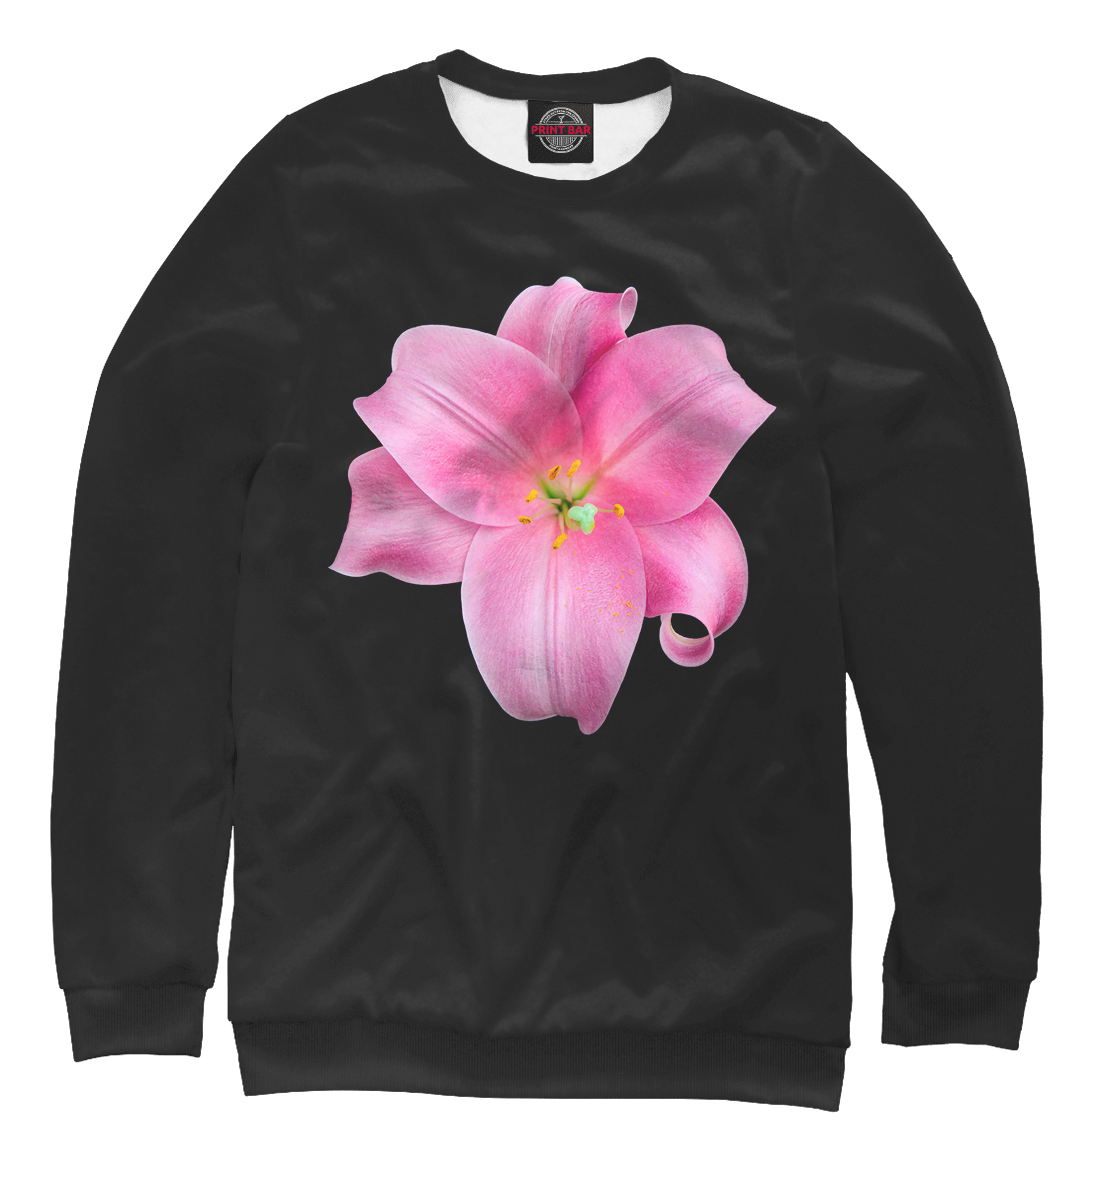 Мужской Свитшот с принтом Розовый цветок, артикул CVE-813547-swi-2mp